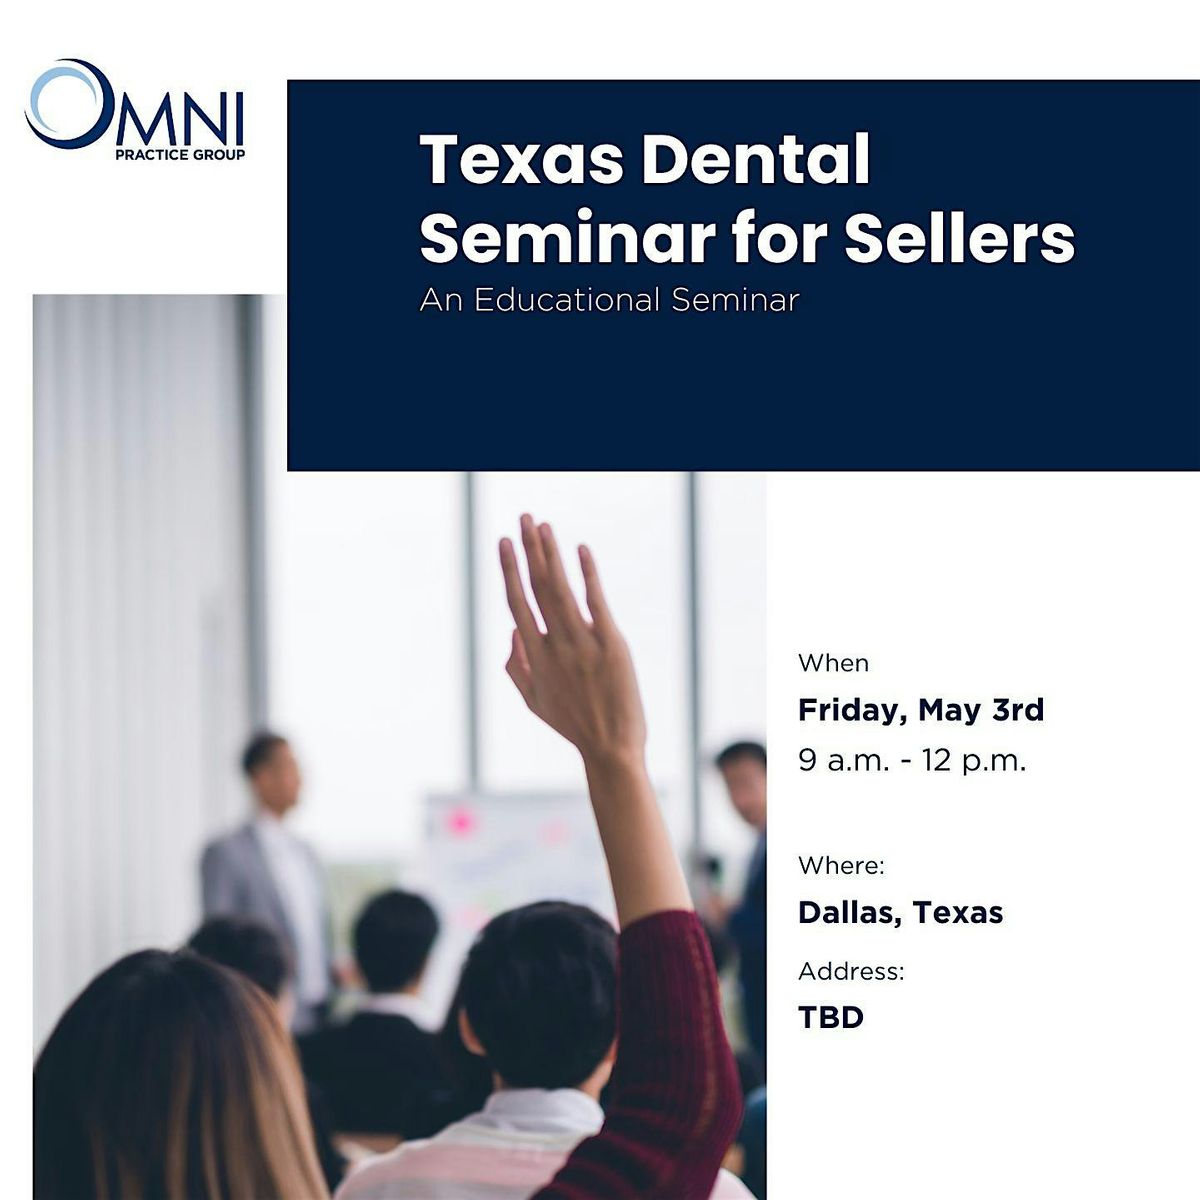 Texas Dental Seminar for Sellers